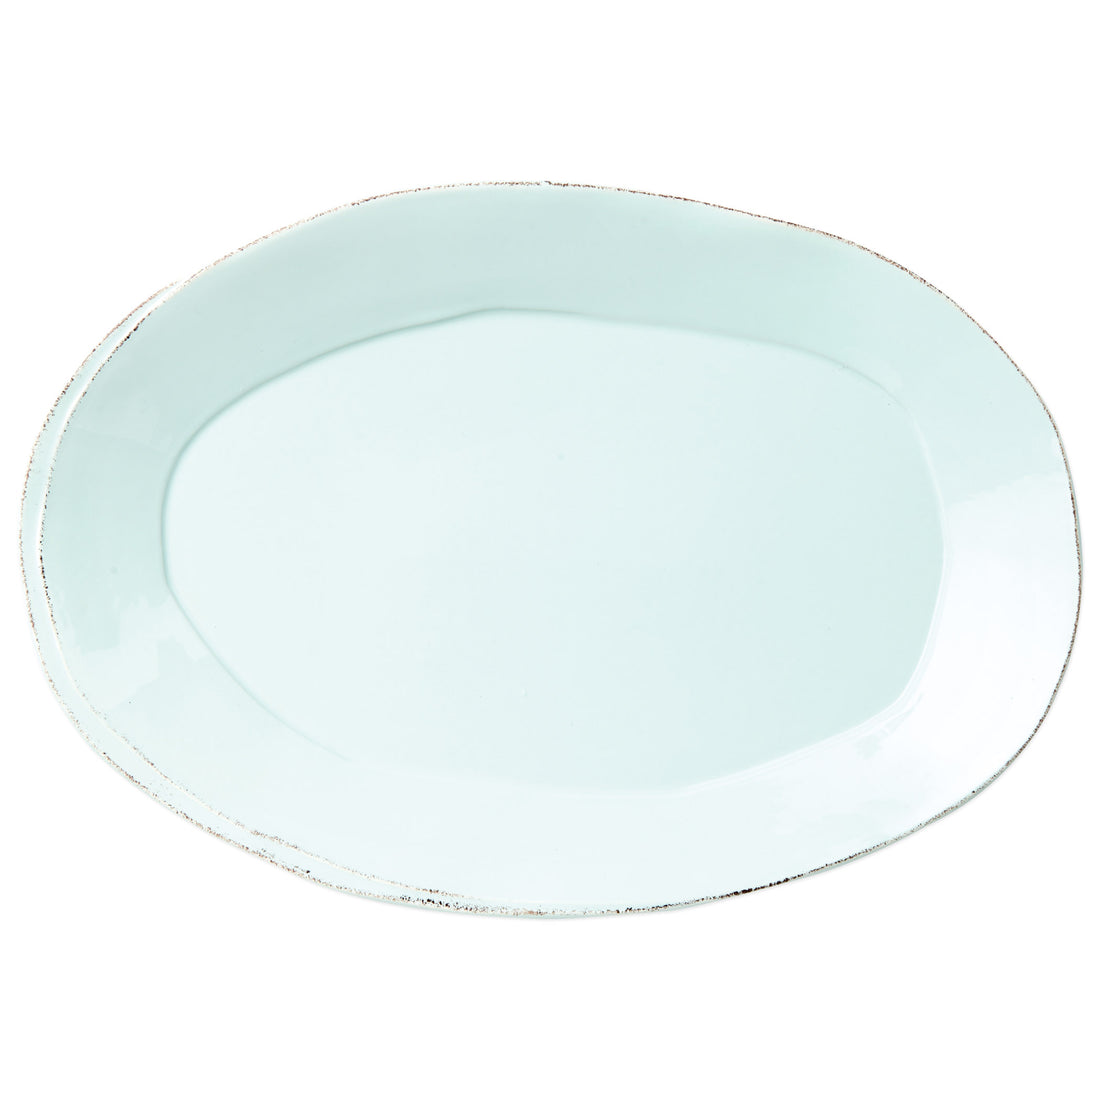 Vietri Lastra Aqua Oval Platter